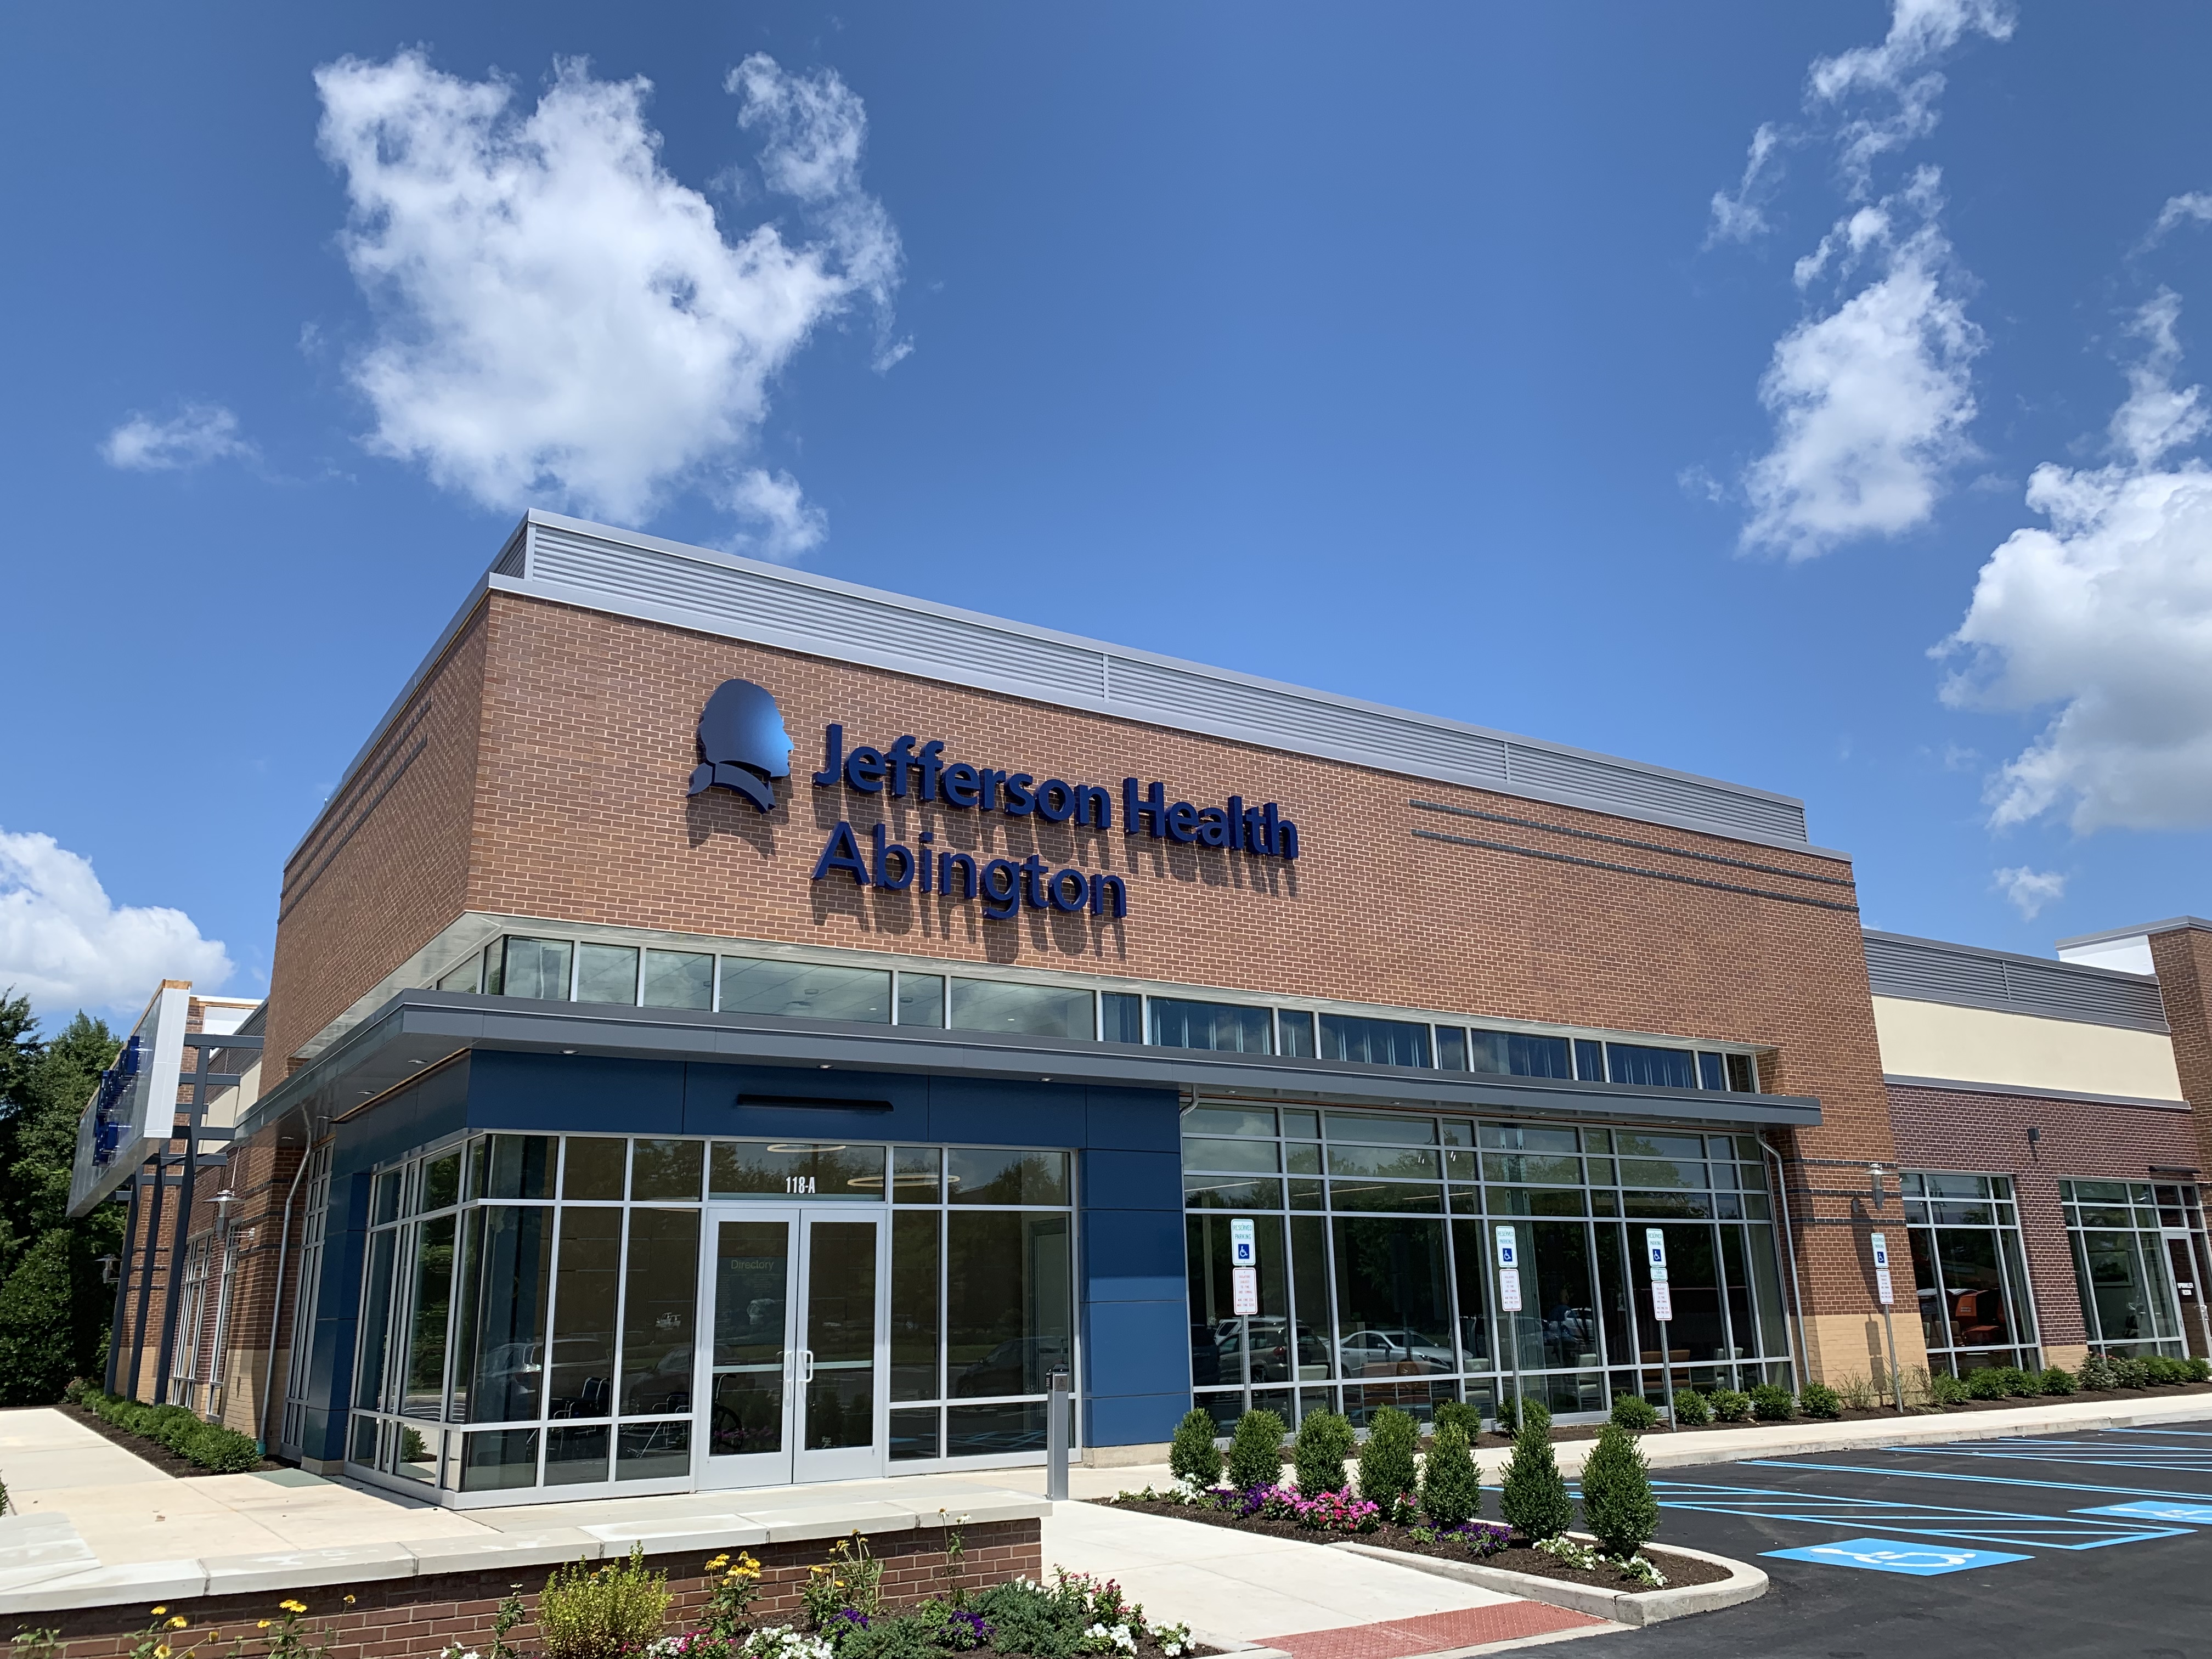 Abington Jefferson Health - Jcp Ambulatory Fitout - Midatlantic Constructionmidatlantic Construction